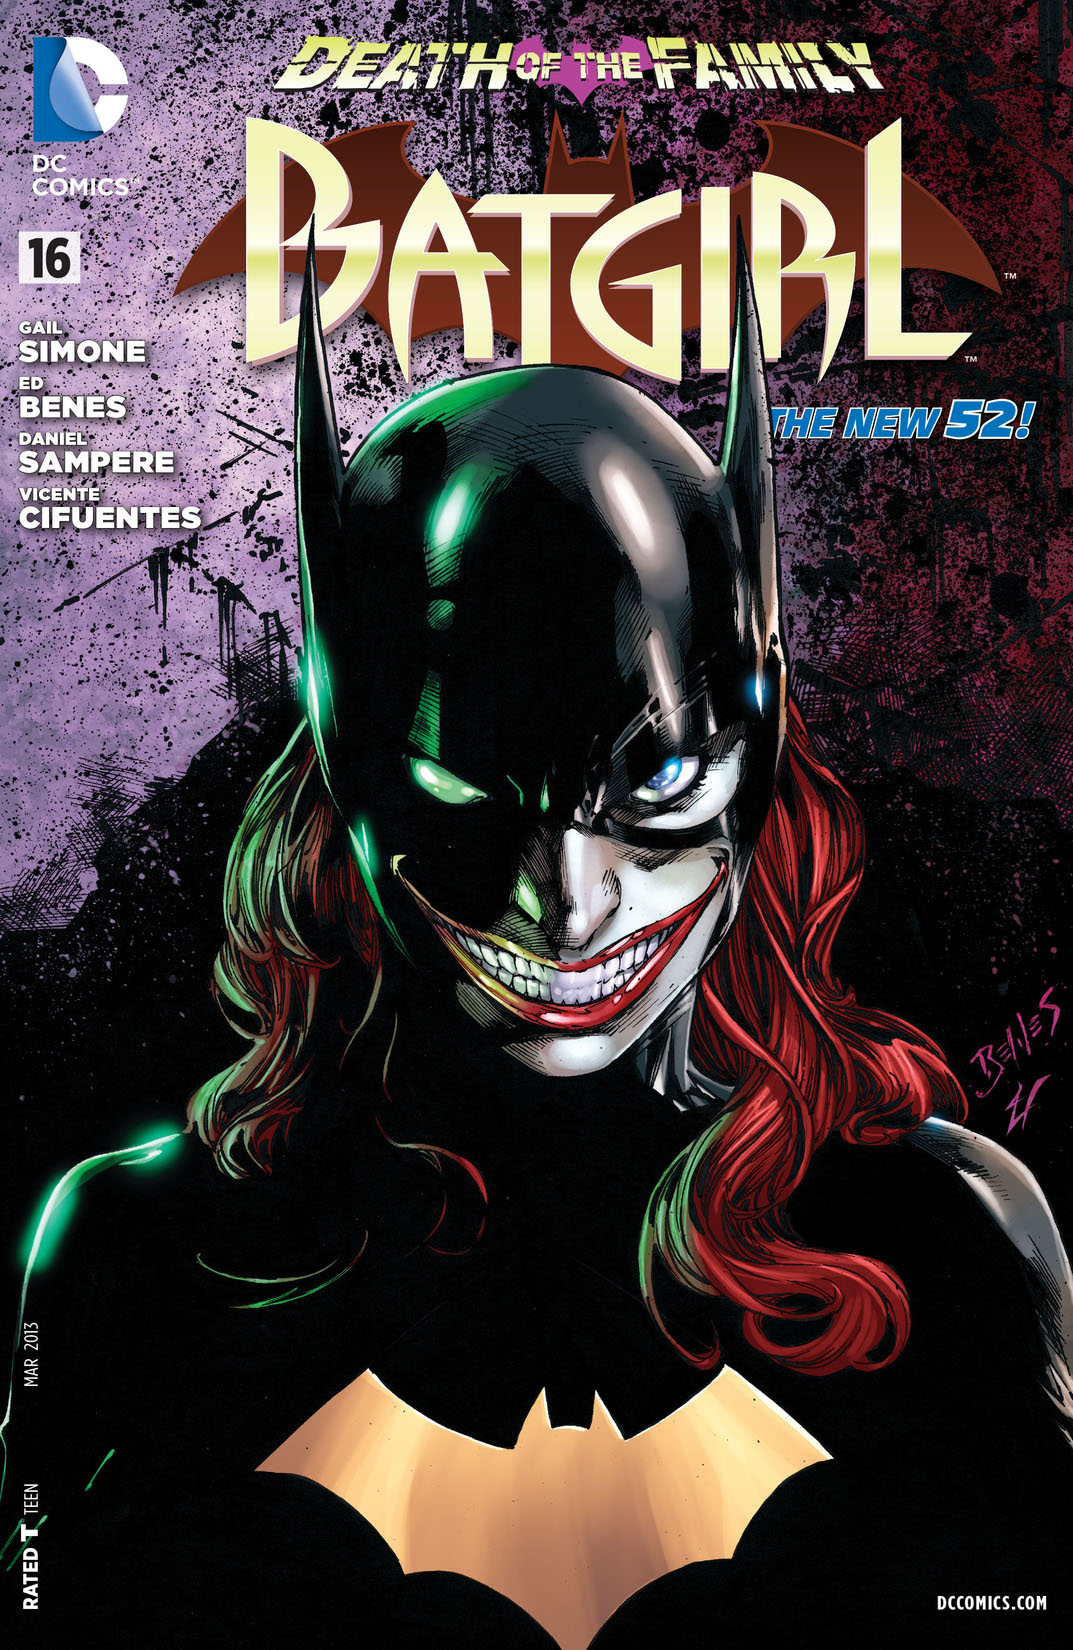 Batgirl (2011-) #16 preview images